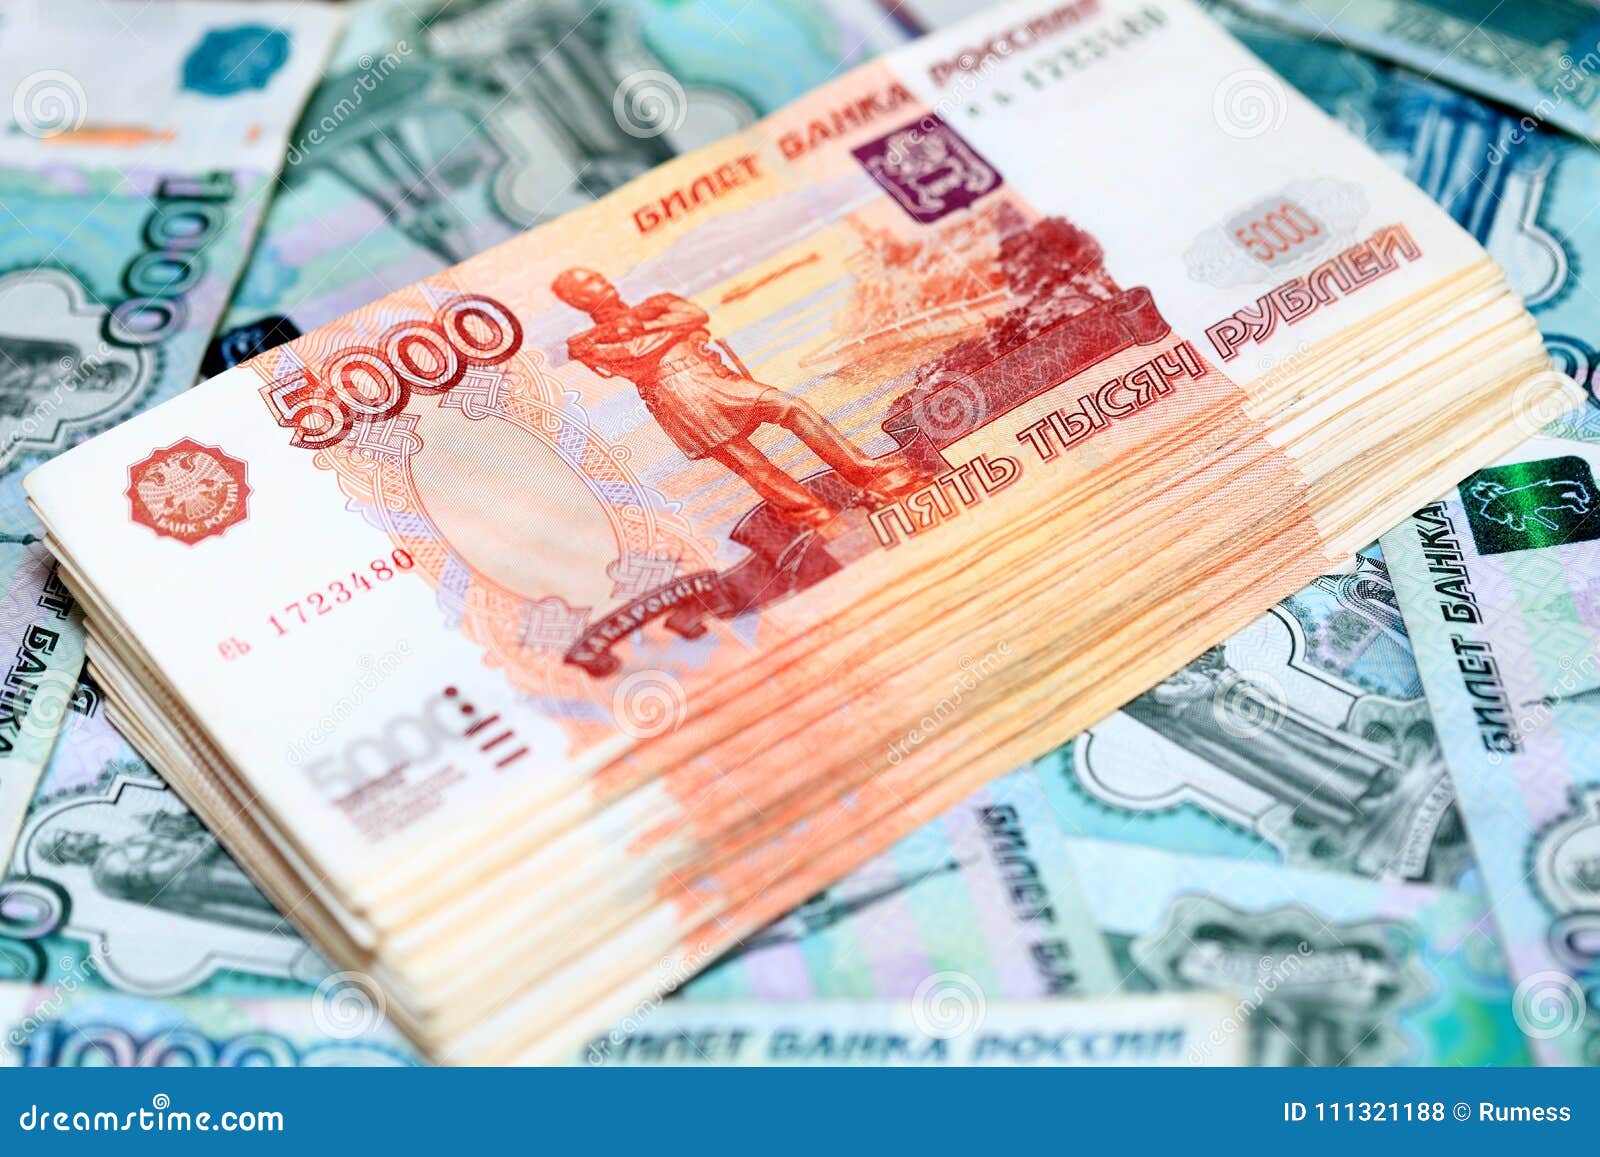 russian ruble bills. stack of money